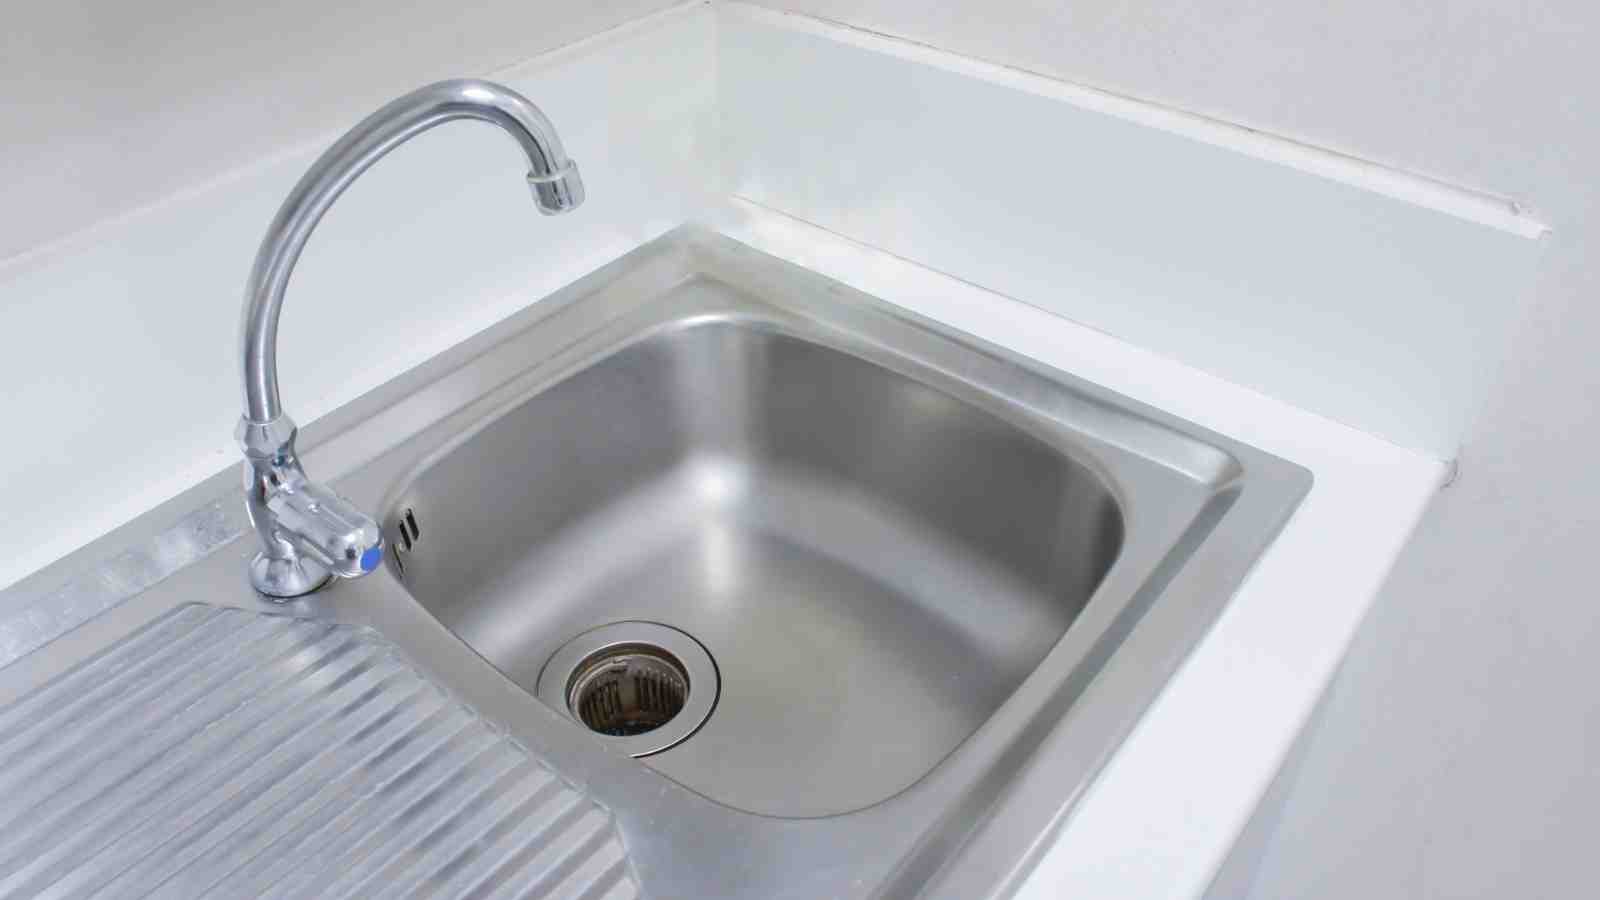 Steps to ensure unclogging of sink